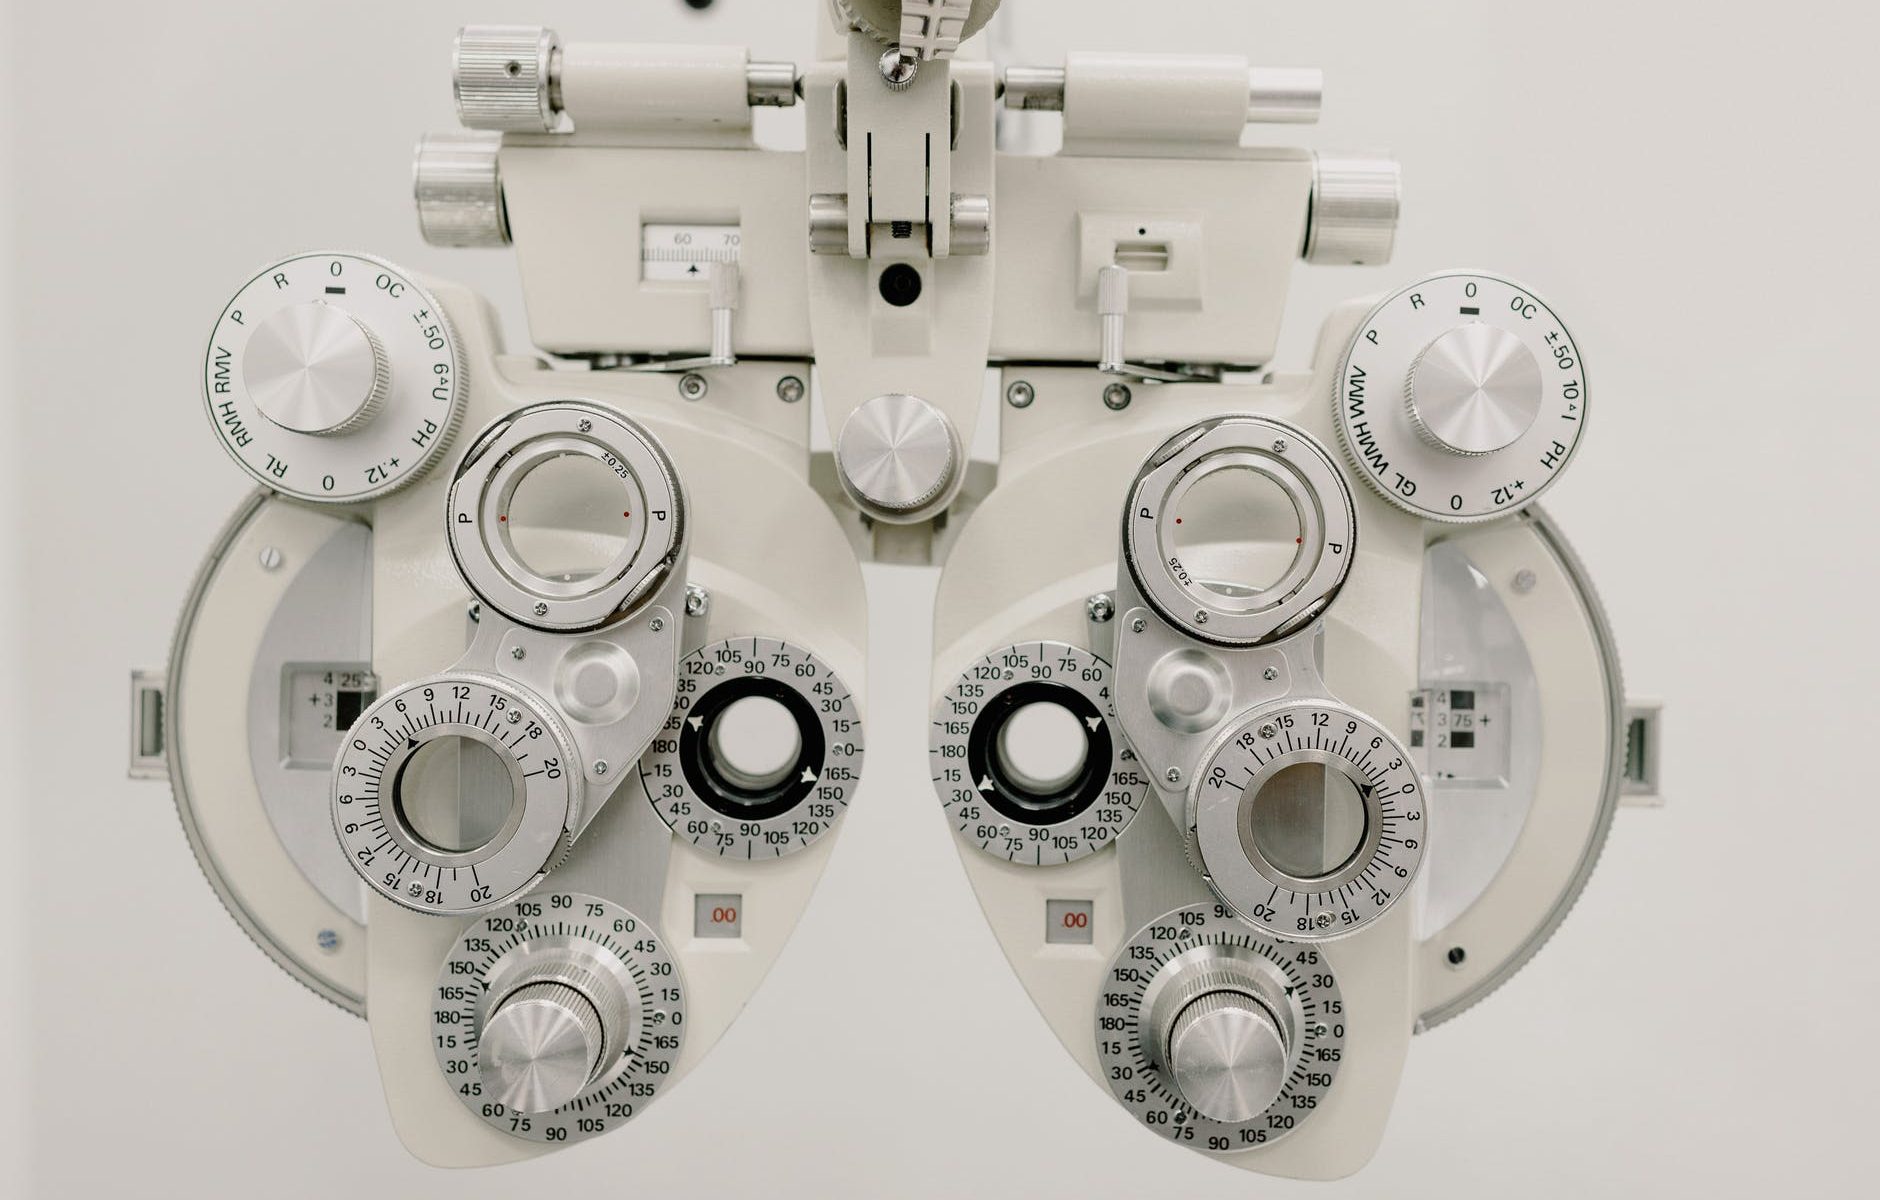 modern professional equipment for checking eyesight